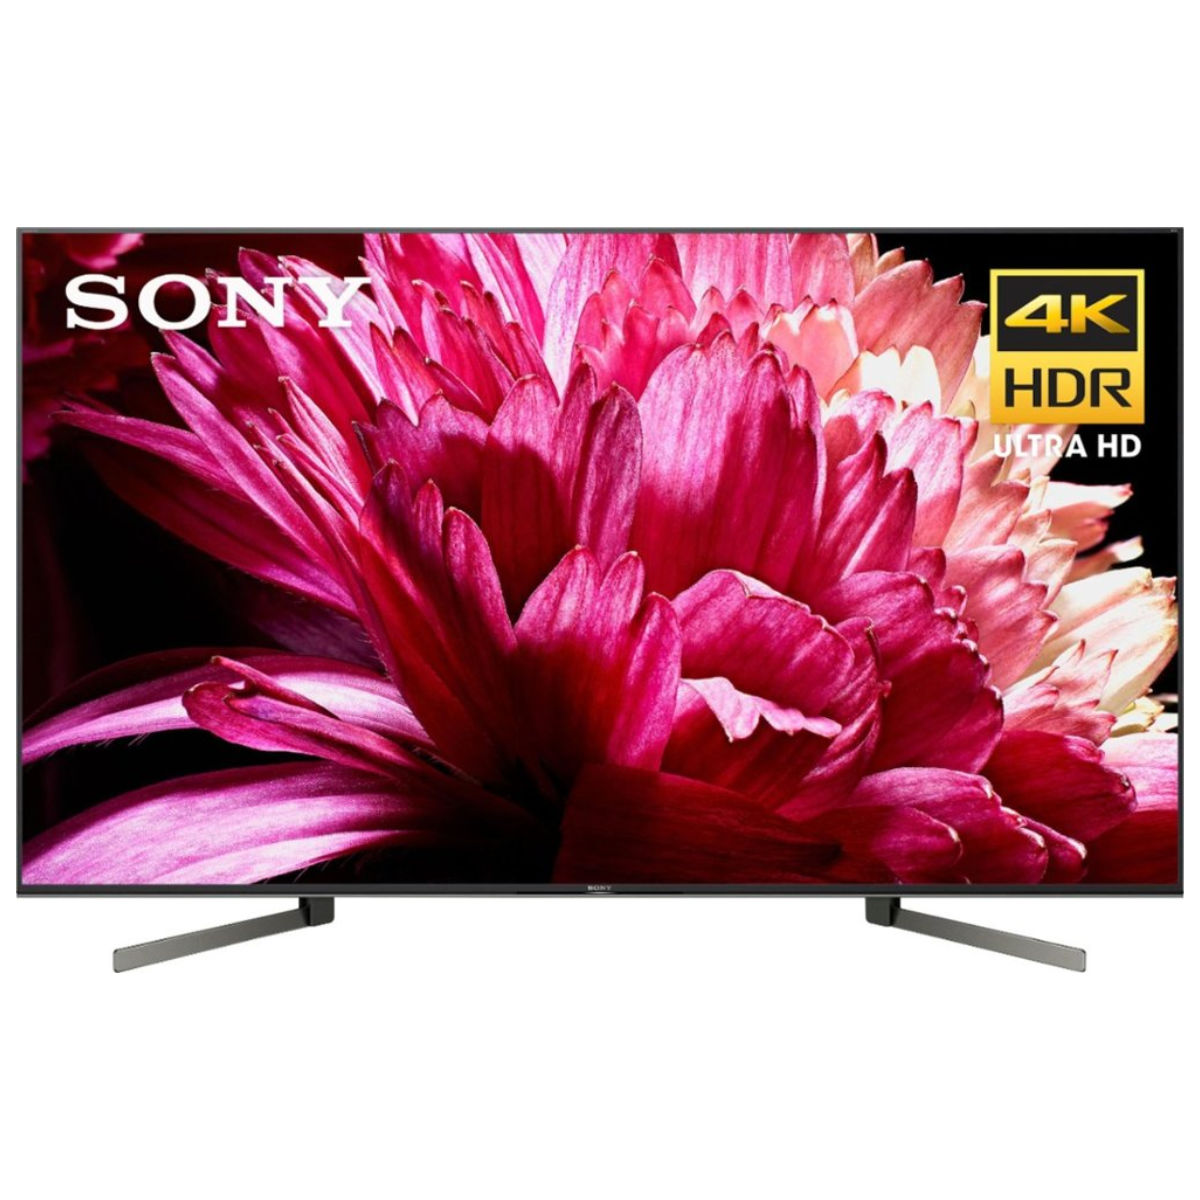 Sony XBR65X950G 65-Inch 4K Ultra Smart HDTV